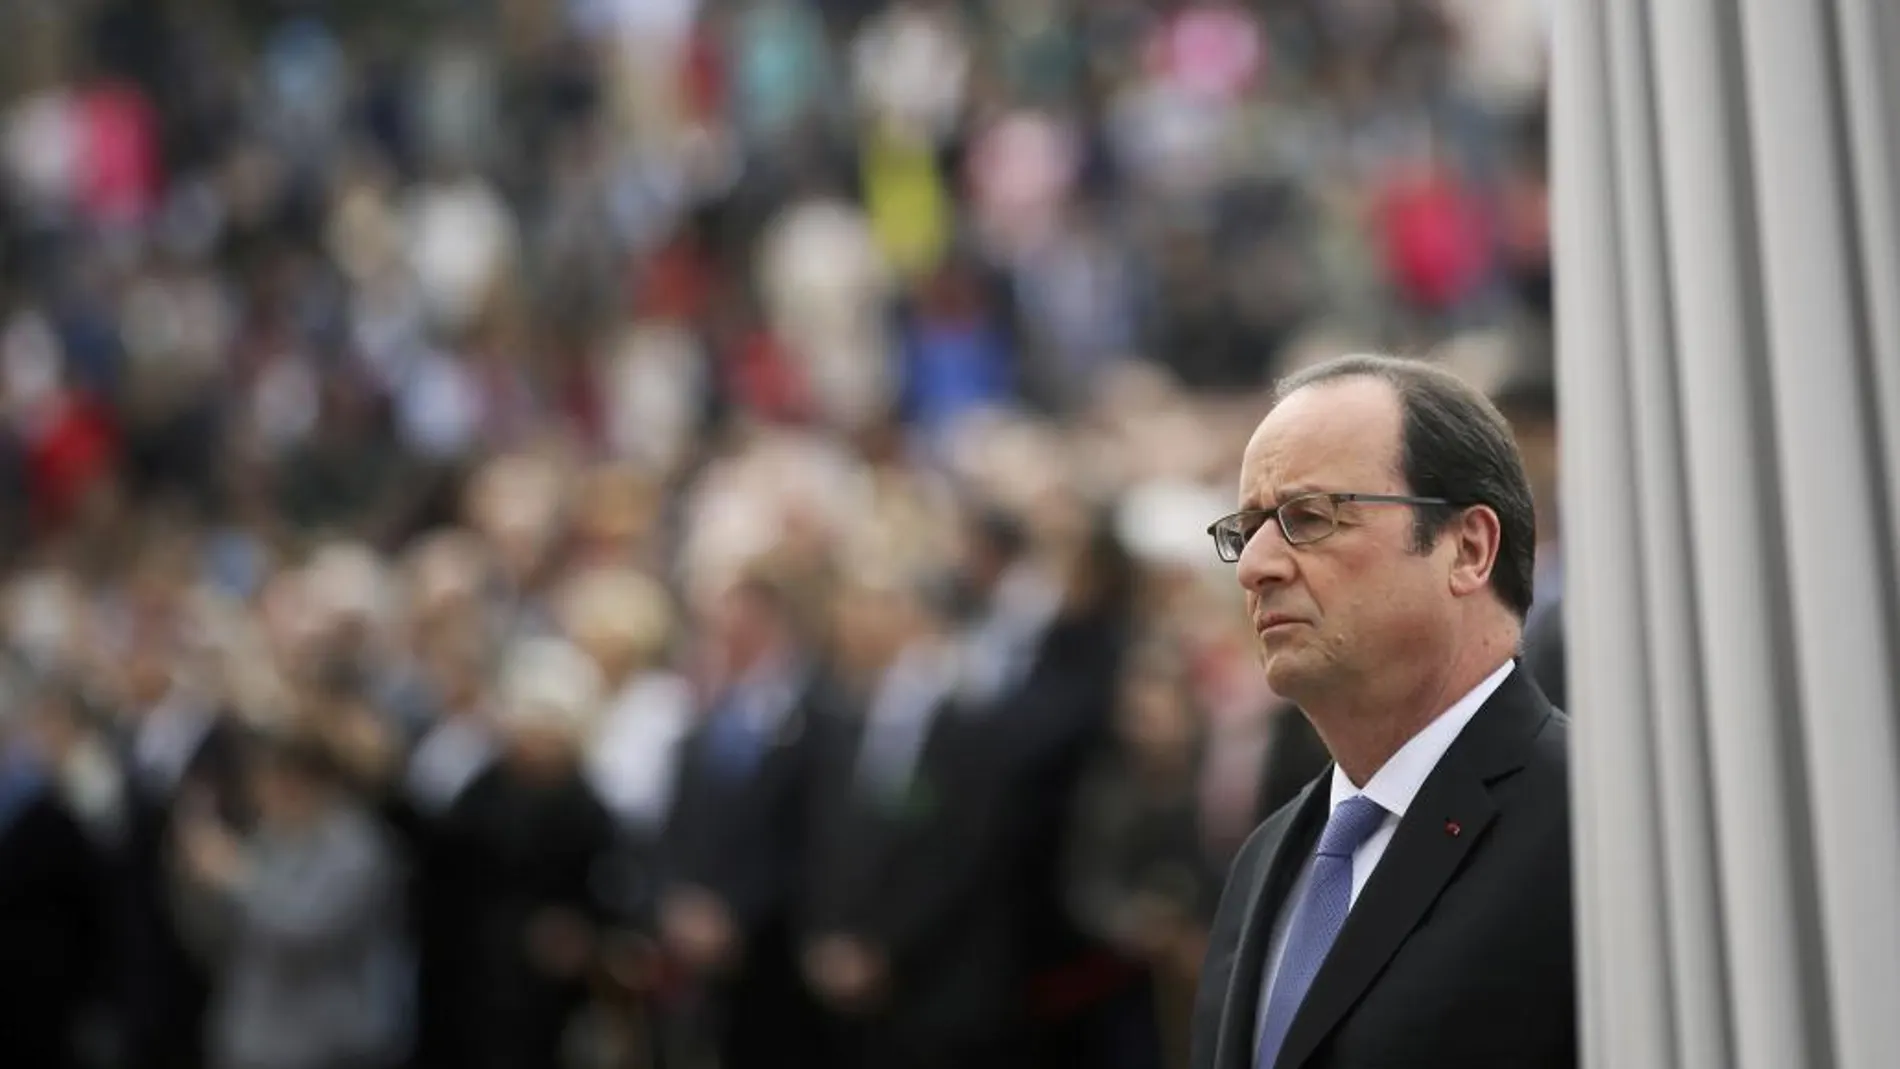 Según un sondeo, Hollande adelanta a Valls como posible mejor candidato